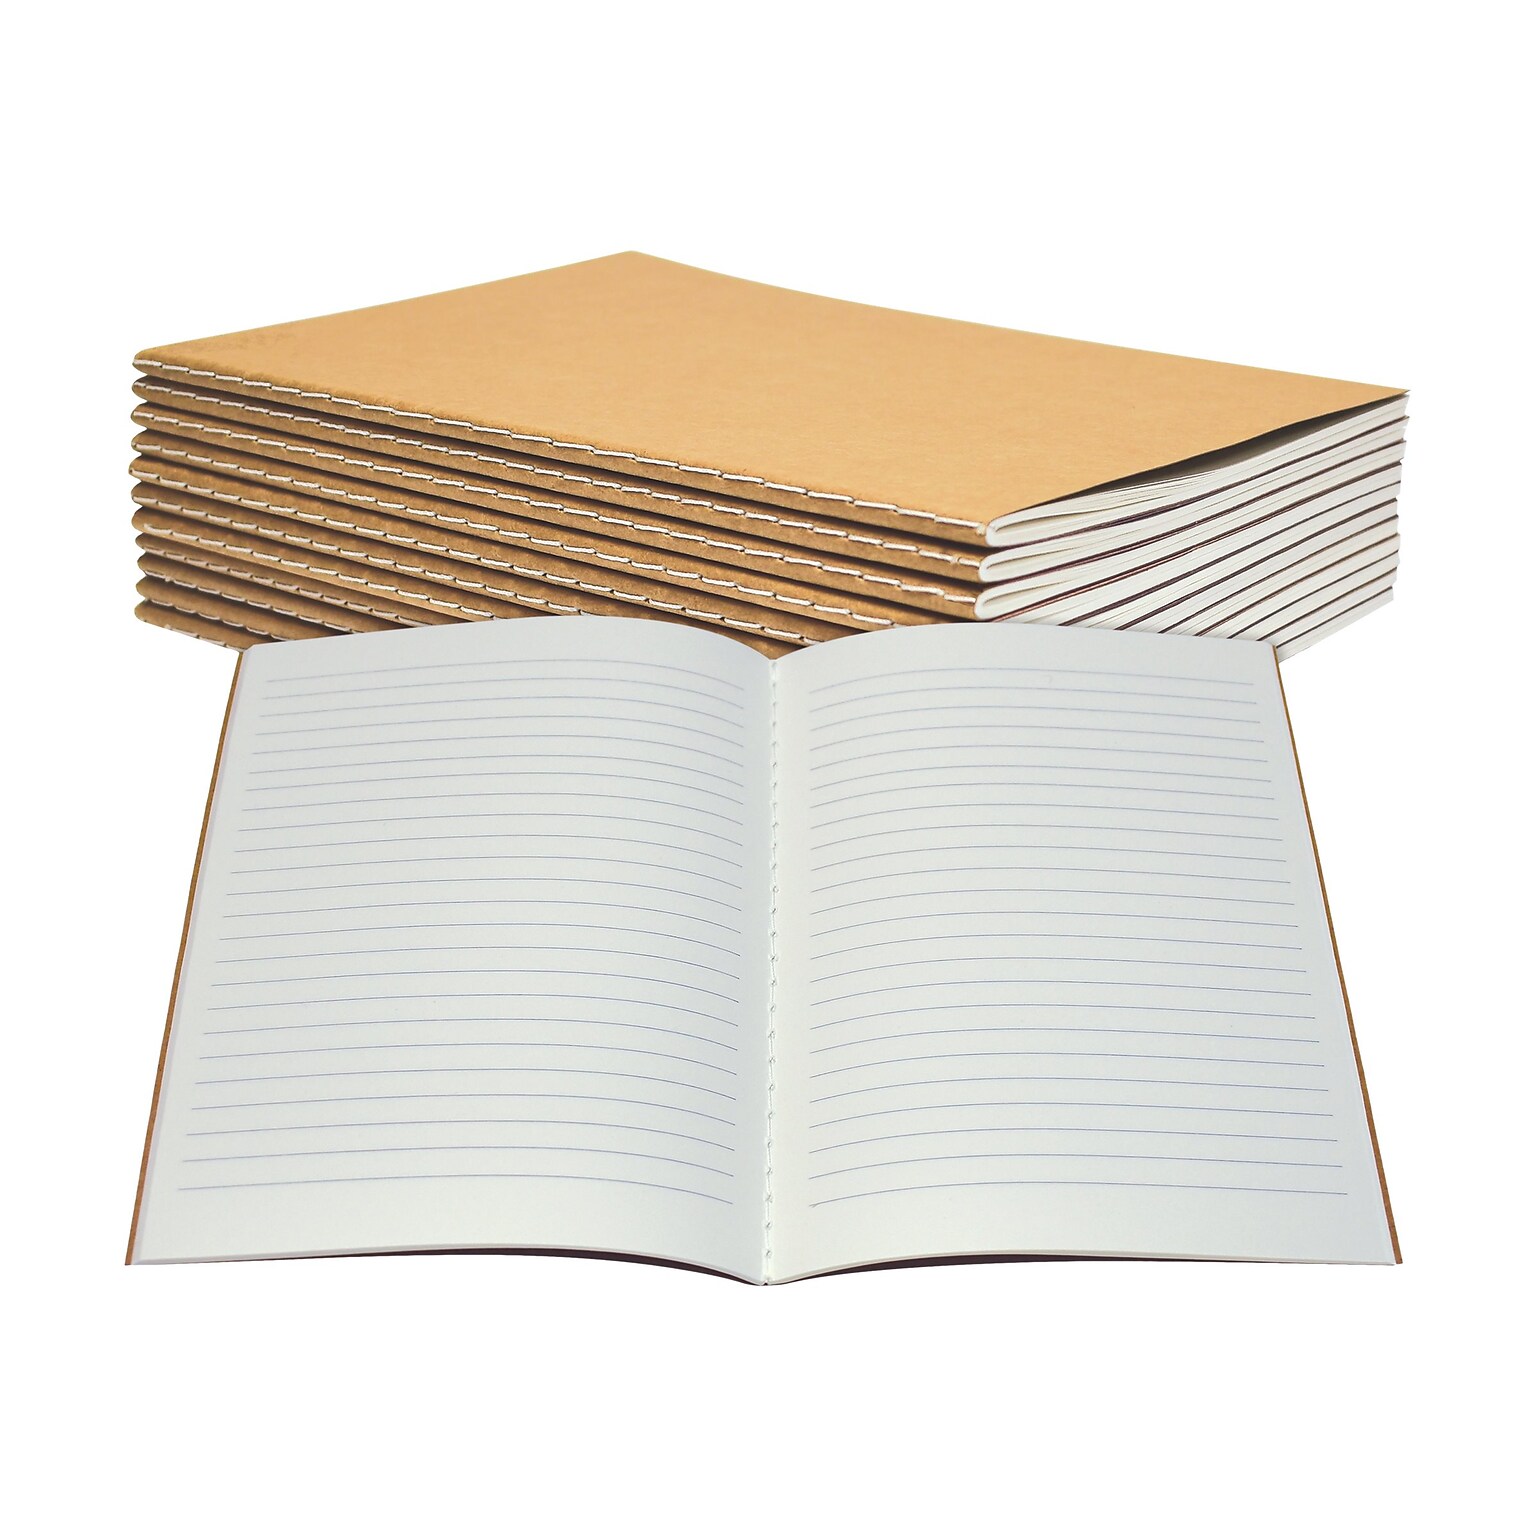 Better Office Composition Notebooks, 5.5 x 8.3, Narrow Ruled, 30 Sheets, Kraft, 12/Pack (25020-12PK)